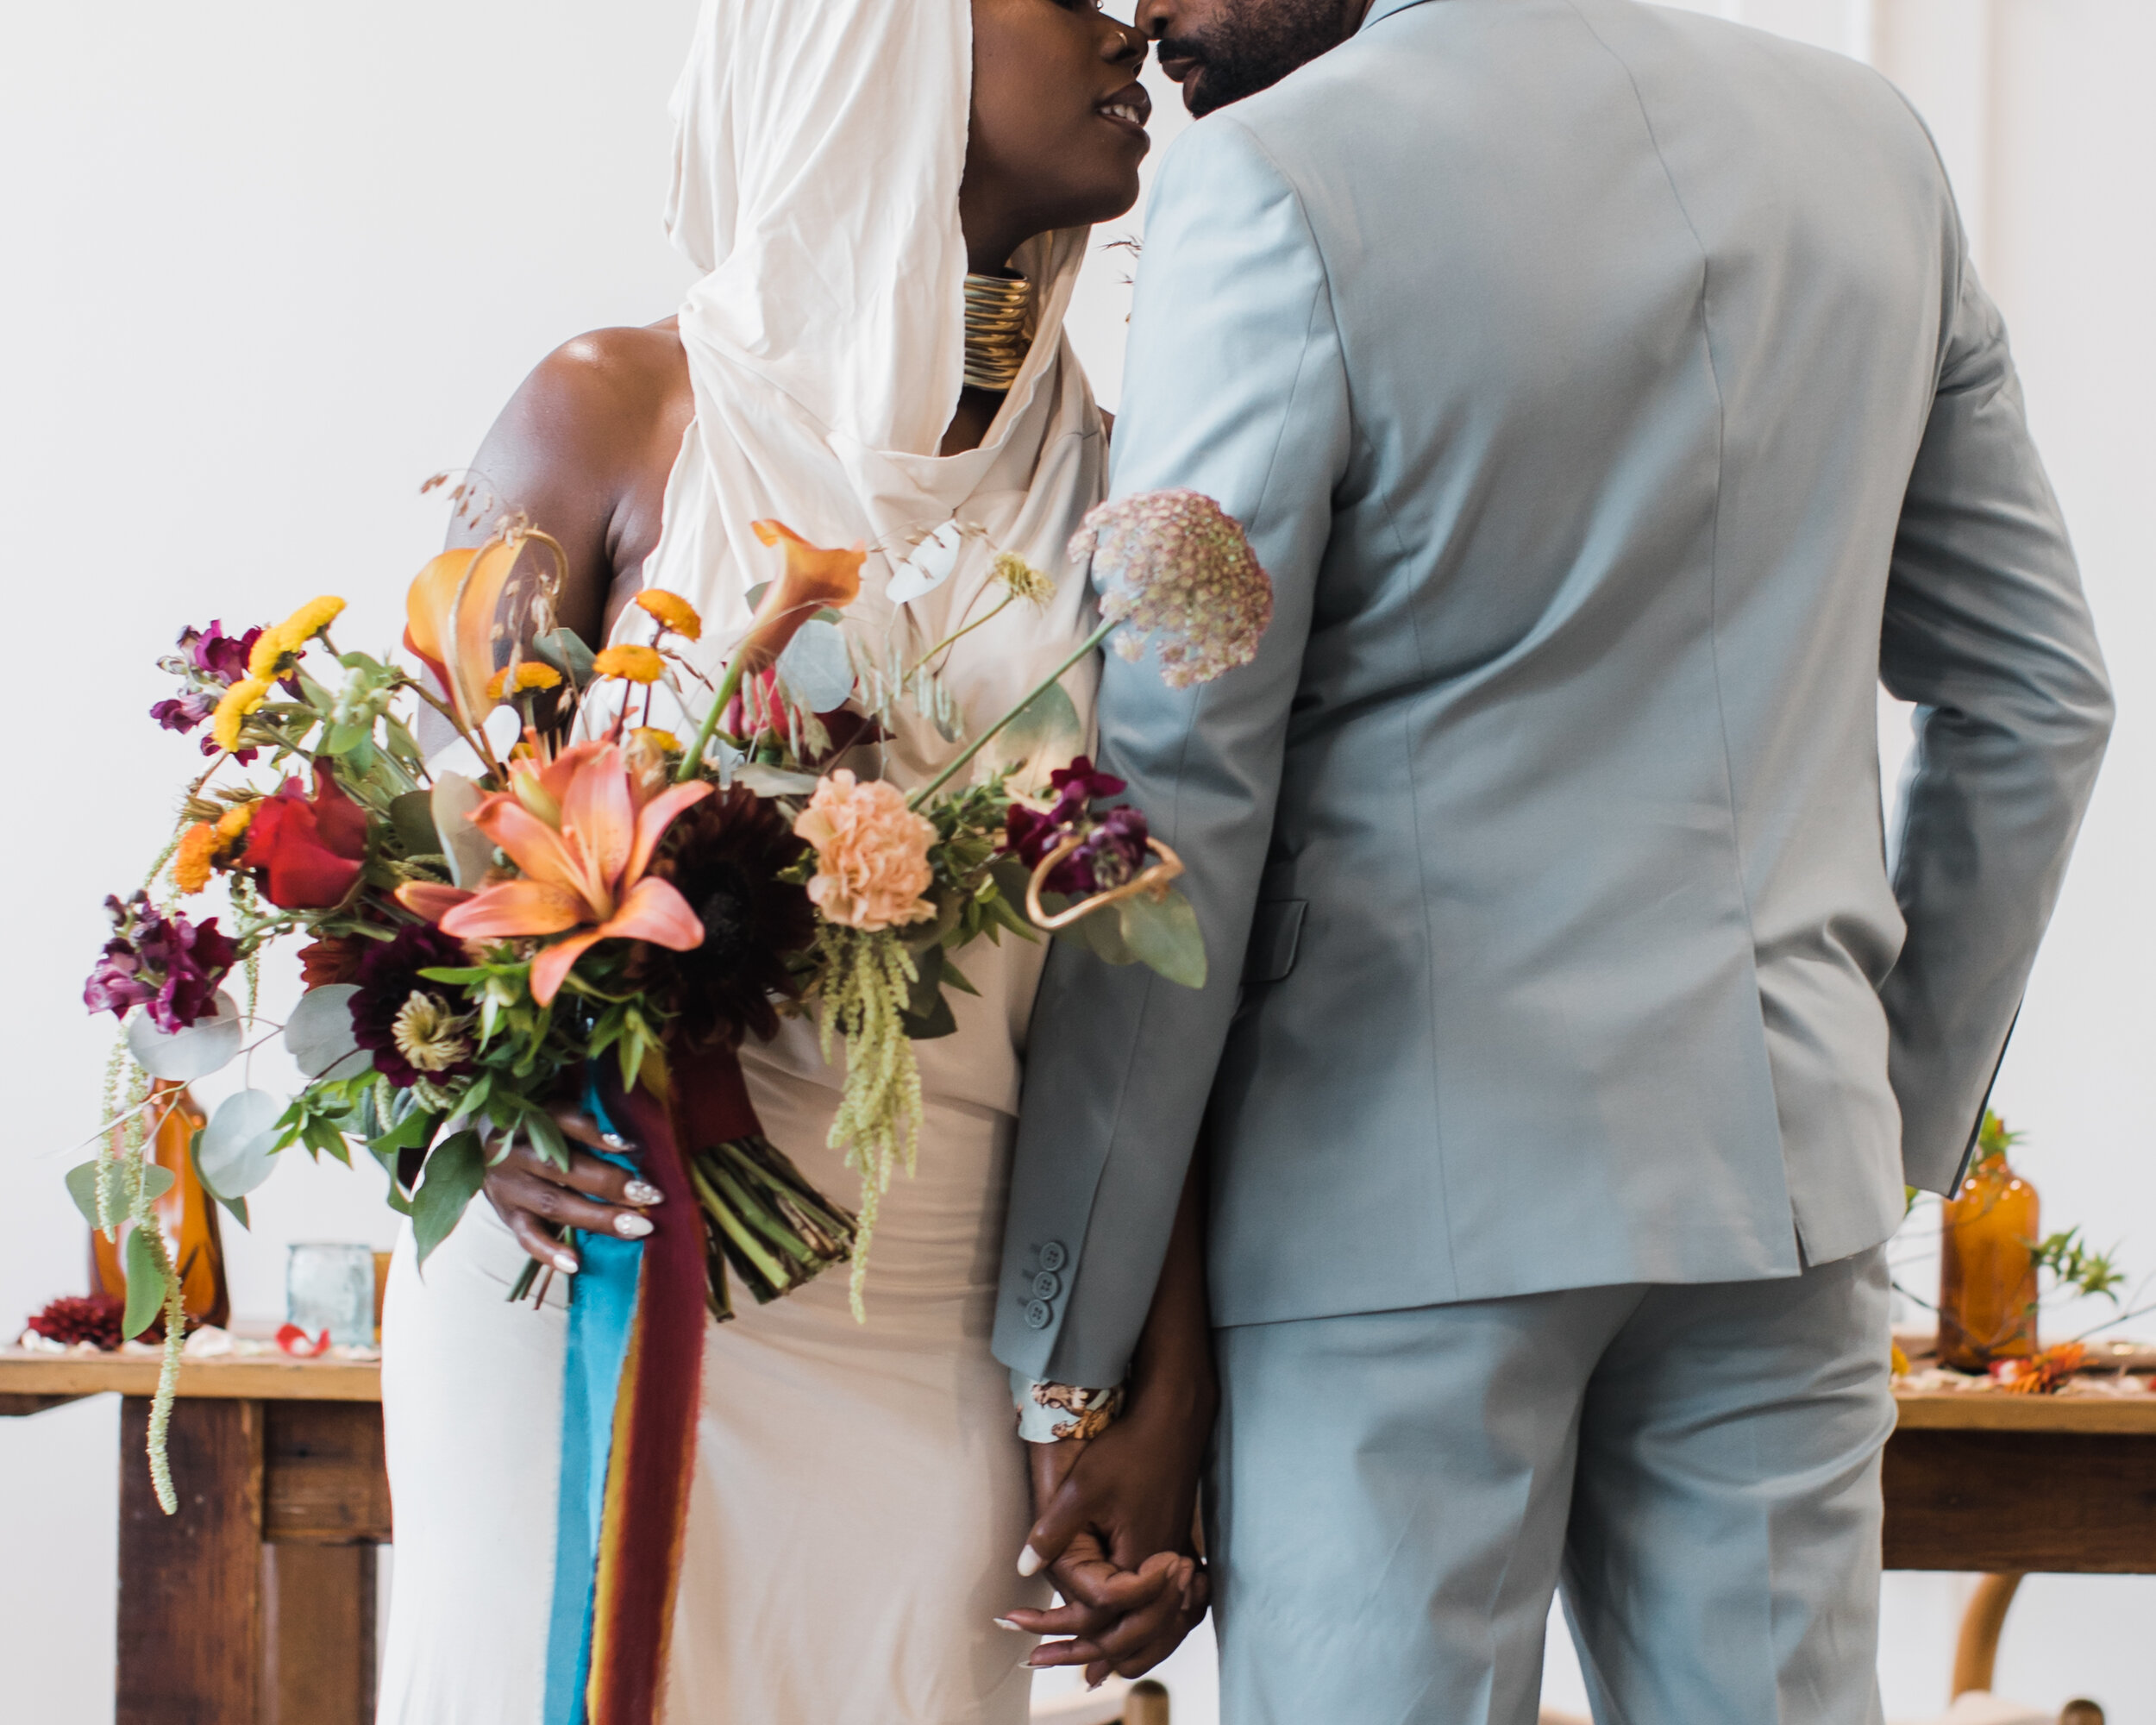 Black Love Matters Wedding Styled Shoot Baltimore Maryland Black Wedding Photographers Megapixels Media Photography at Haven Street Ballroom African Bride and Groom Wedding Details (83 of 120).jpg